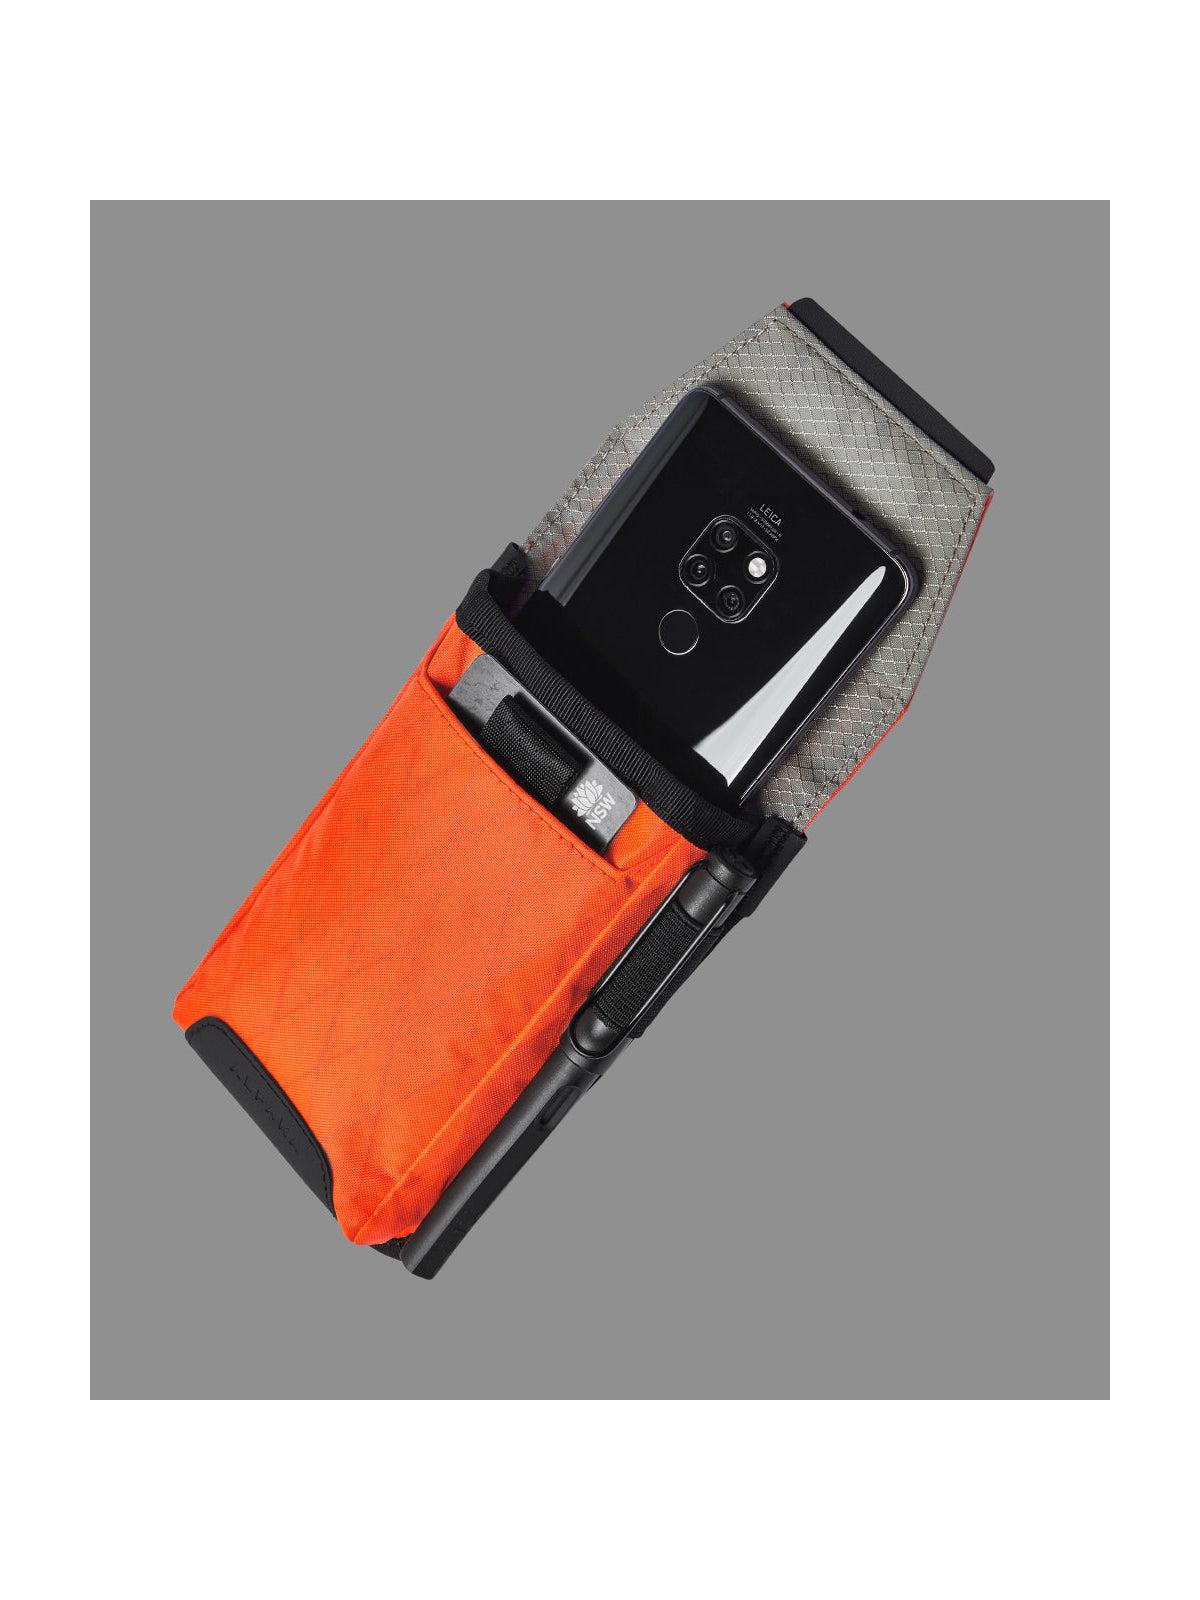 Alpaka Modular Phone Sling Limited Edition Orange Blaze